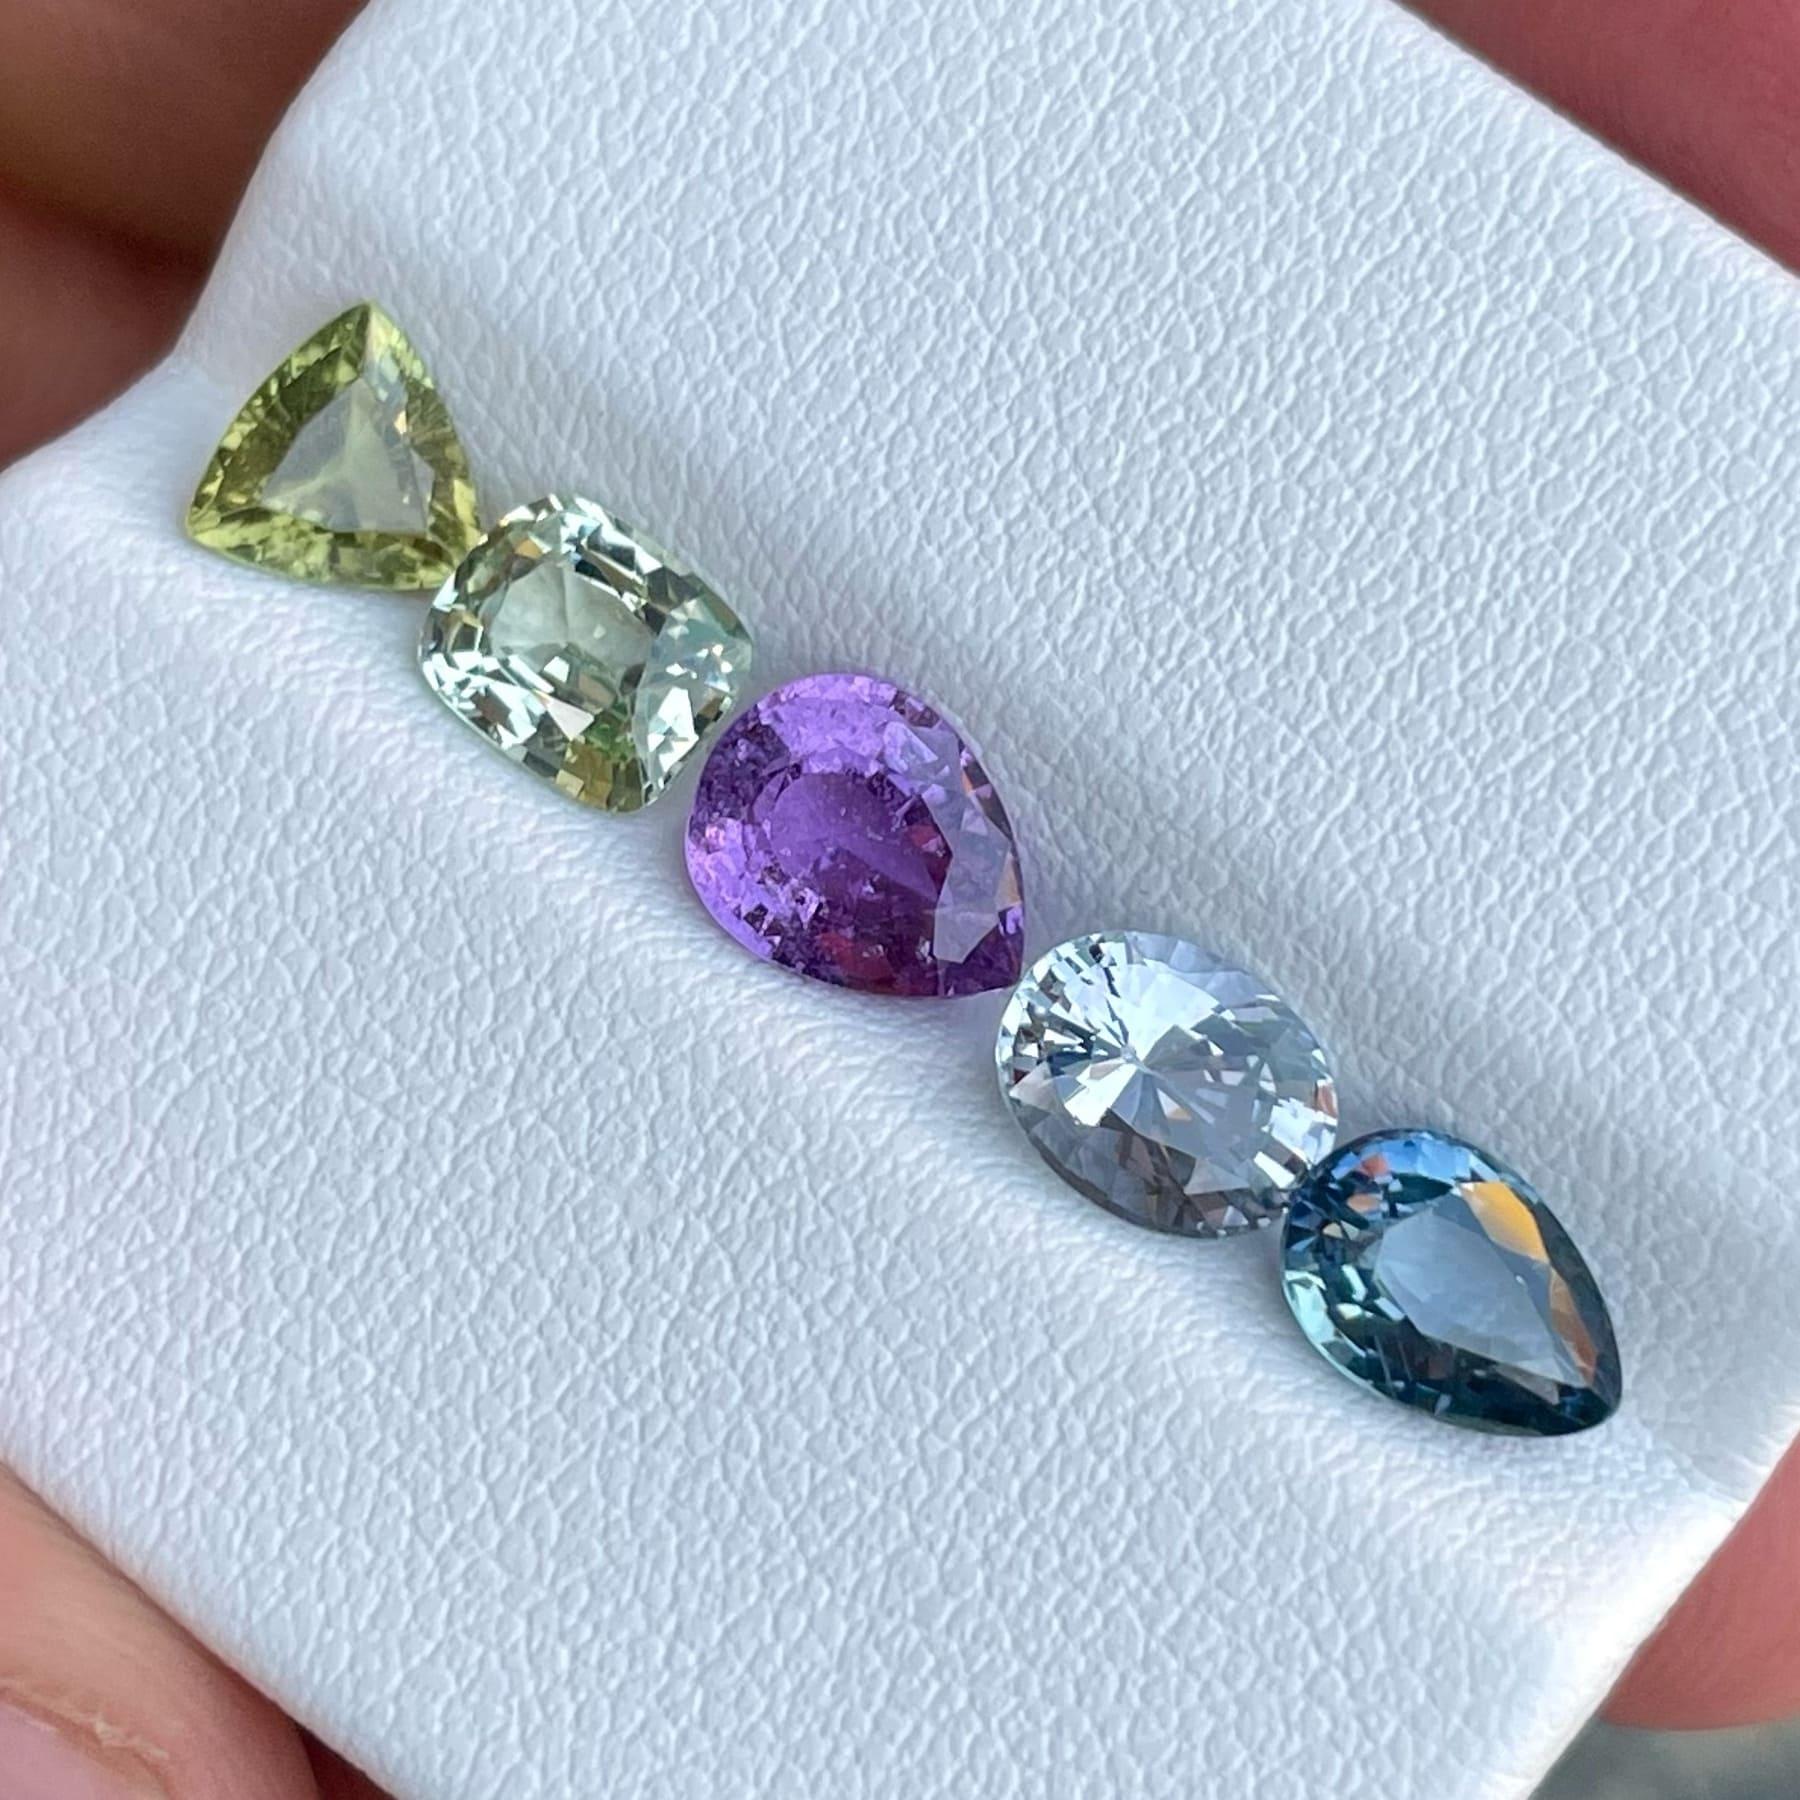 Moderne 6.04 carats Colorful Stones Loose Sapphire Lot Natural Gemstones From Sri Lanka en vente